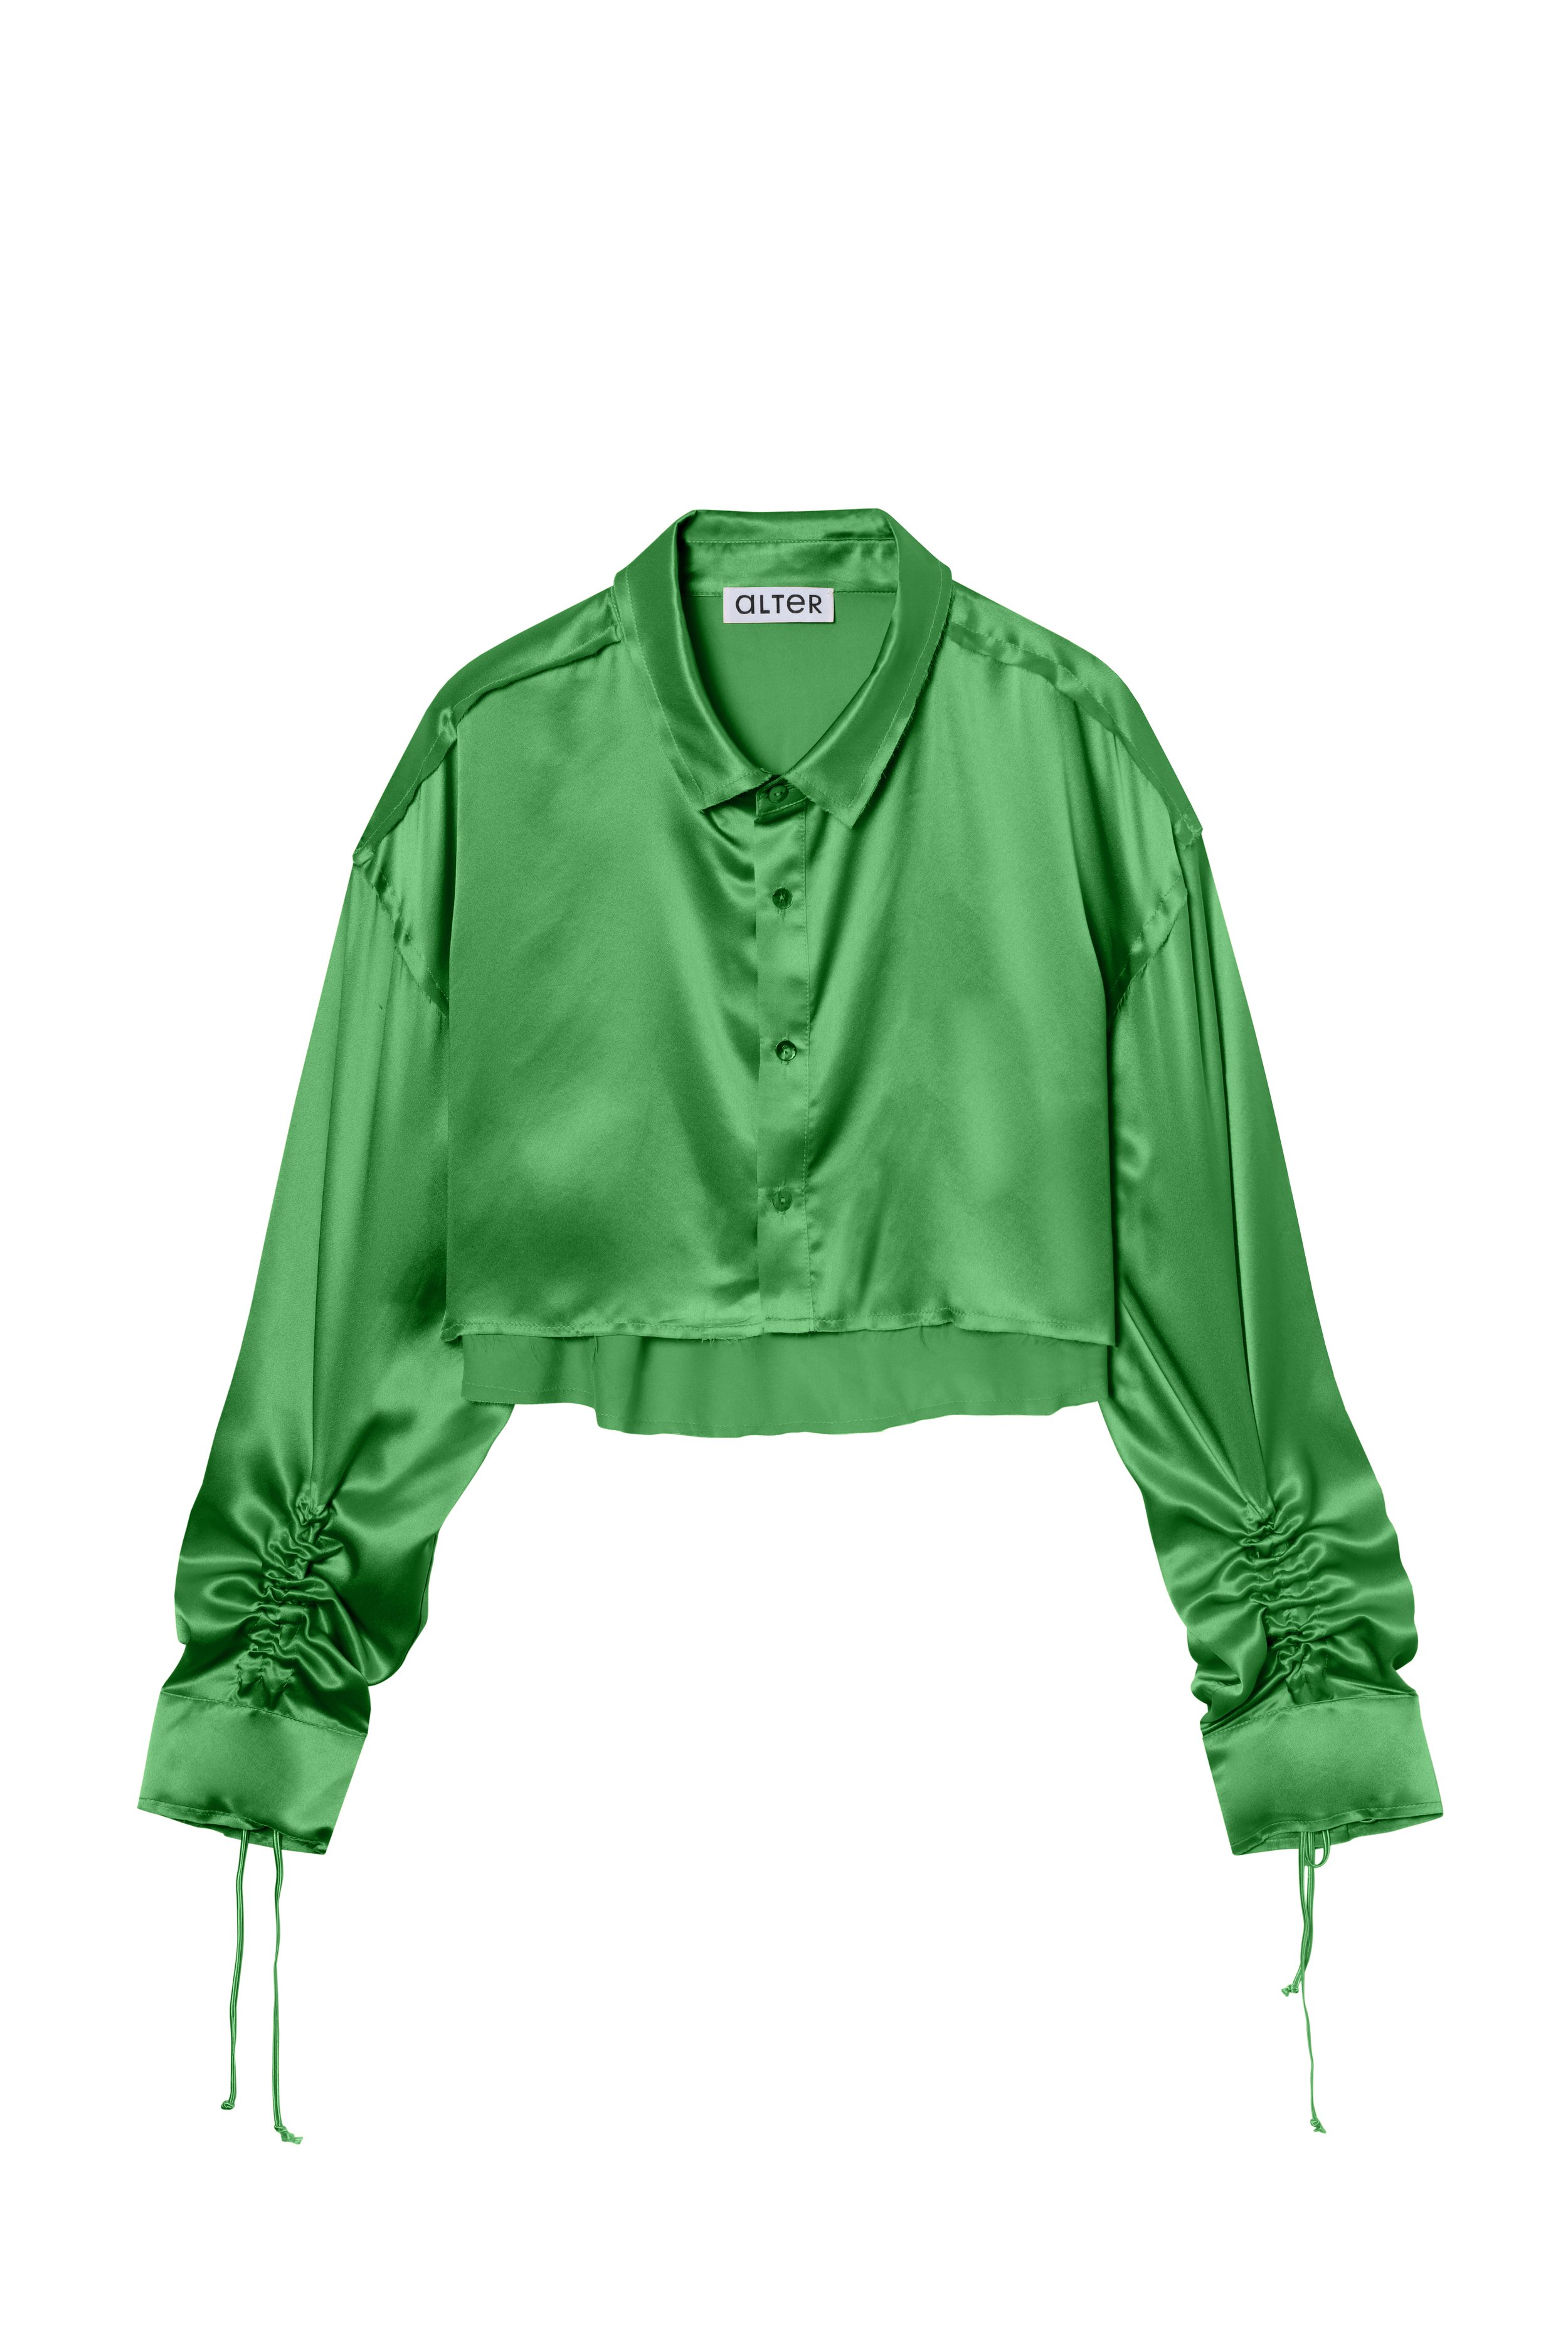 Alter Designs Lou Cropped Shirt in Green Satin Silk.jpg